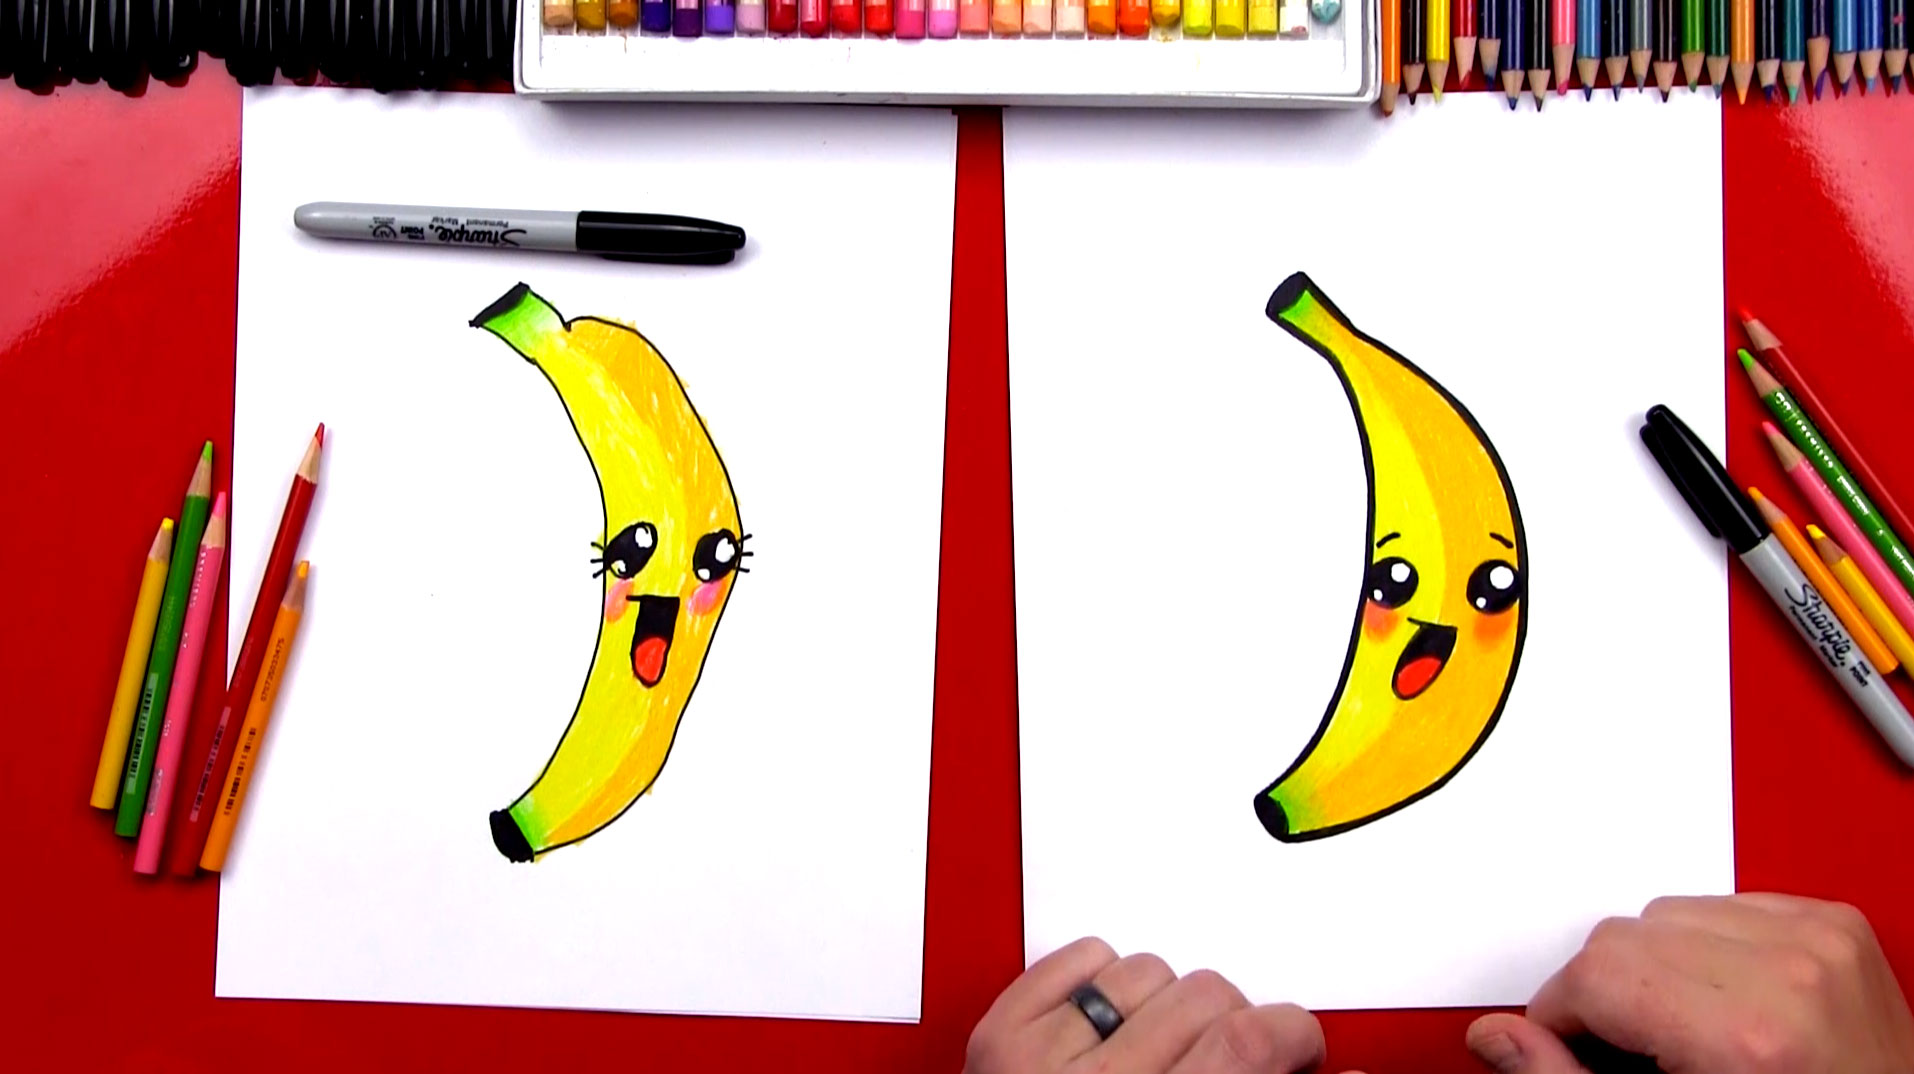 Banana Drawing Tutorial - How to draw Banana step by step